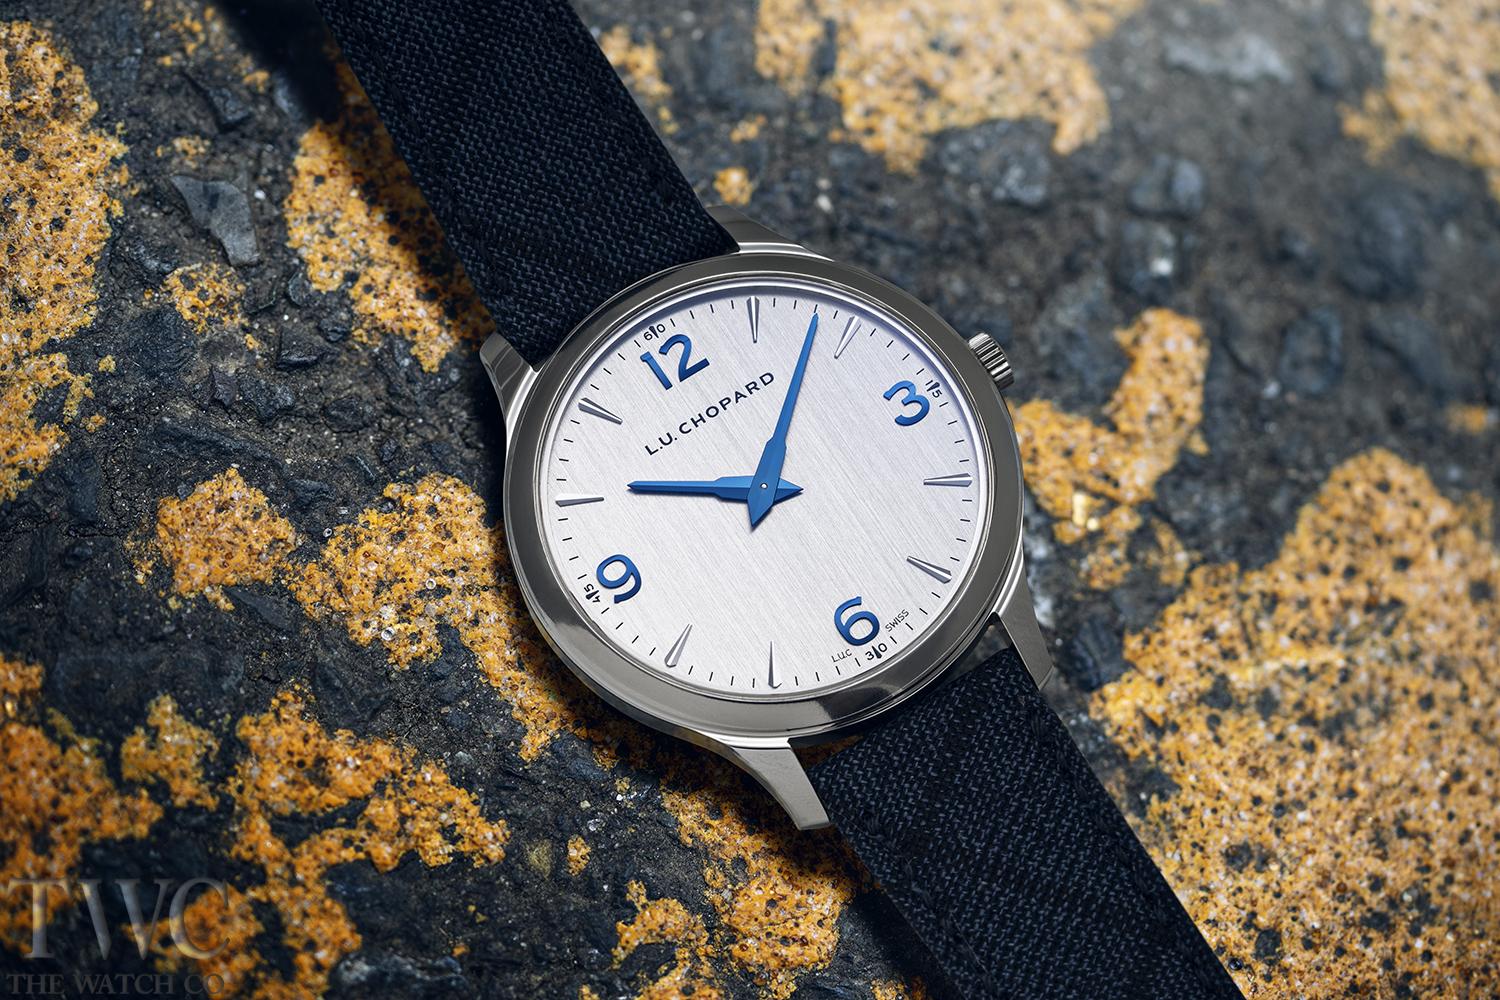 Chopard Men's L.U.C. Perpetual Chronograph Watch